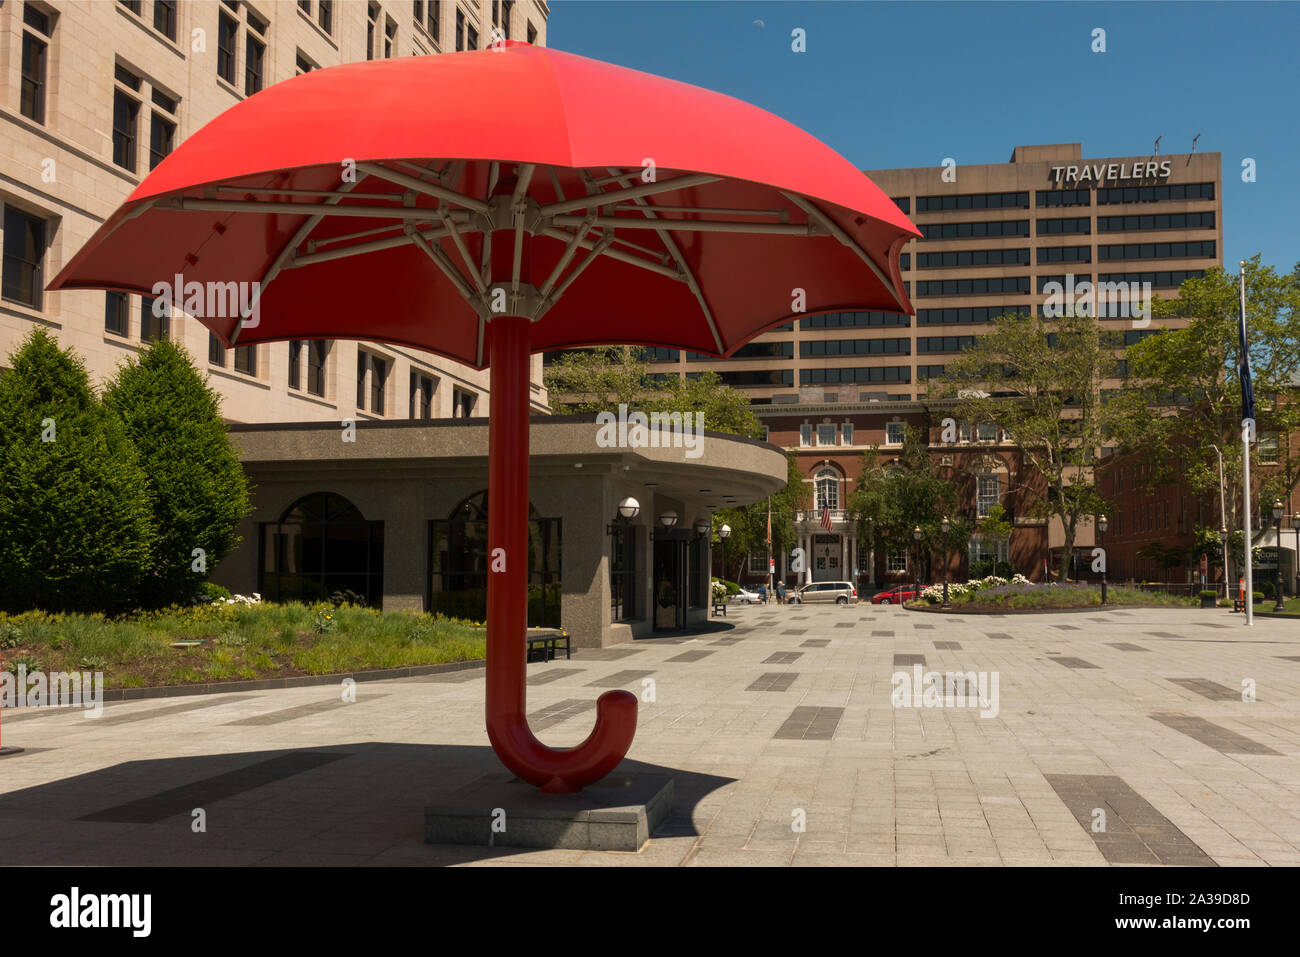 Travelers Insurance red umbrella sculpture in Hartford CT Stock Photo